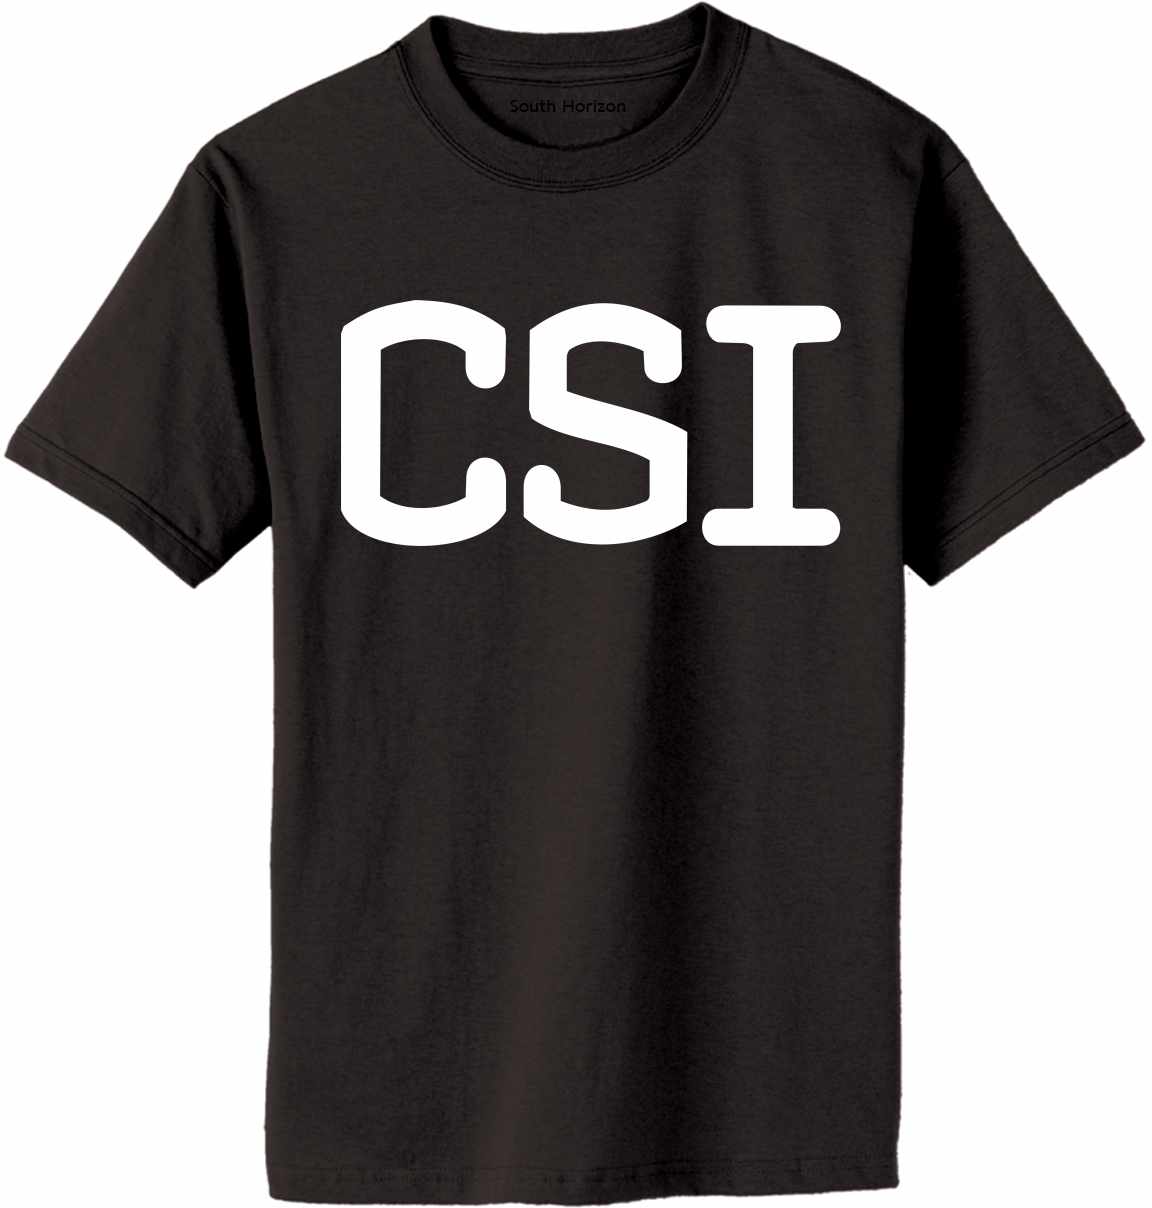 C S I Adult T-Shirt (#443-1)